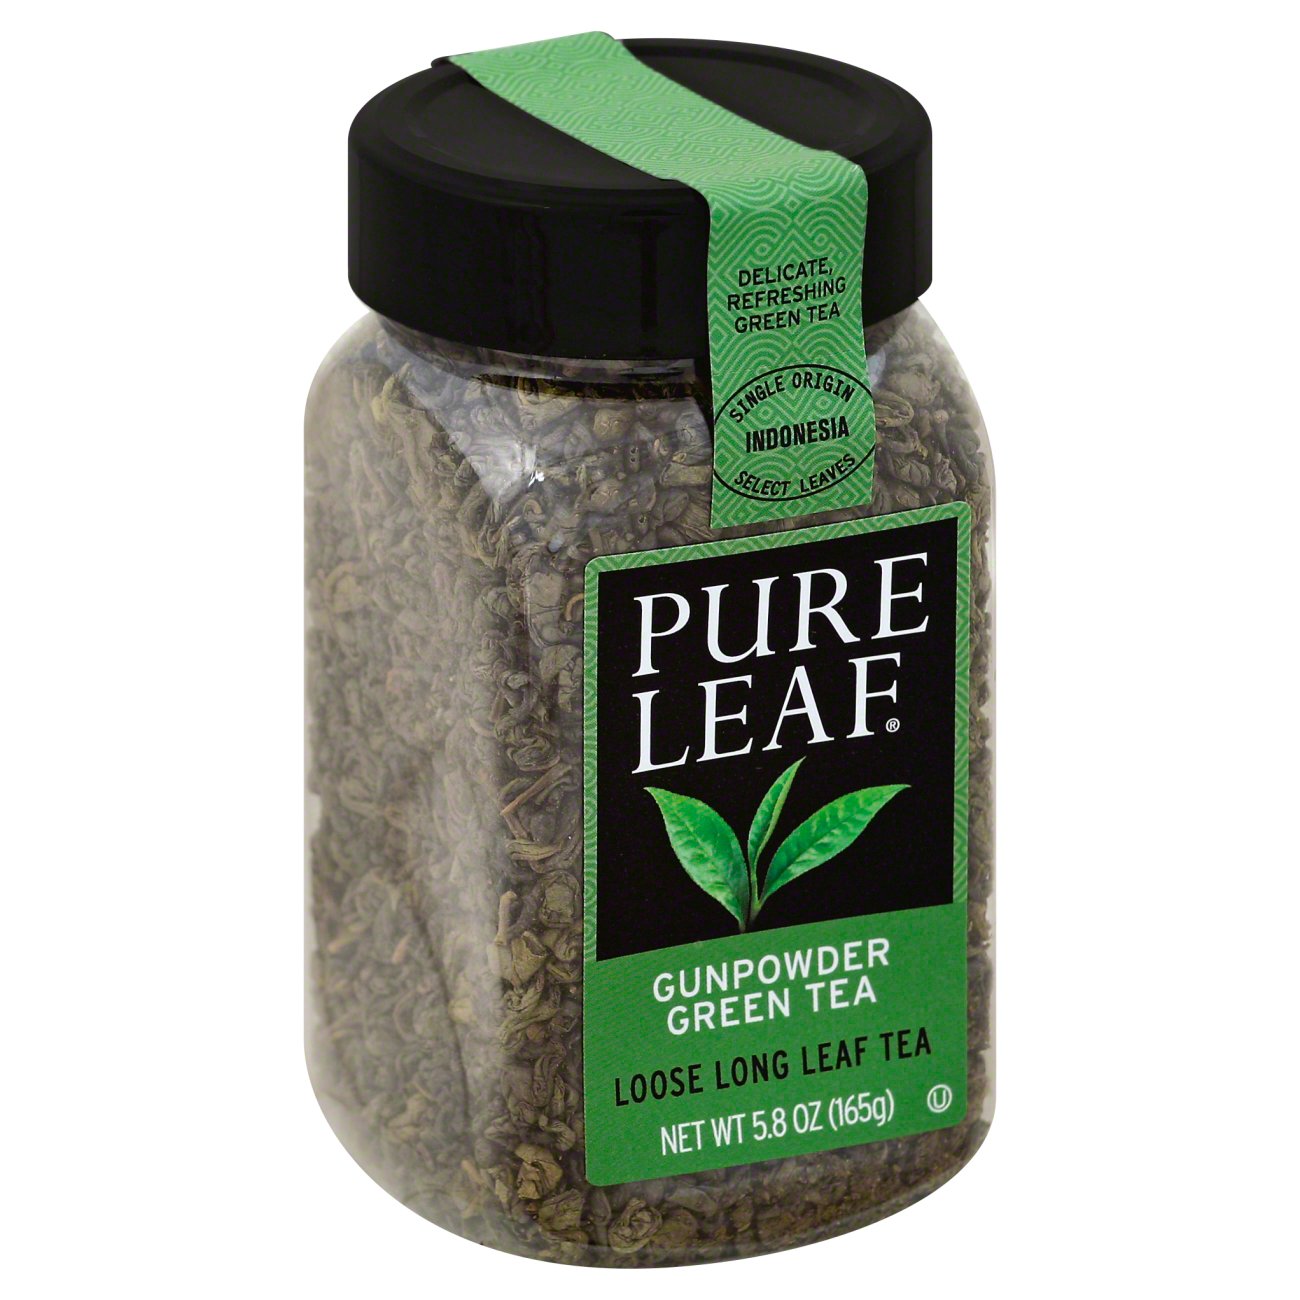 Pure Leaf Loose Long Leaf Gunpowder Green Tea Shop Tea at HEB